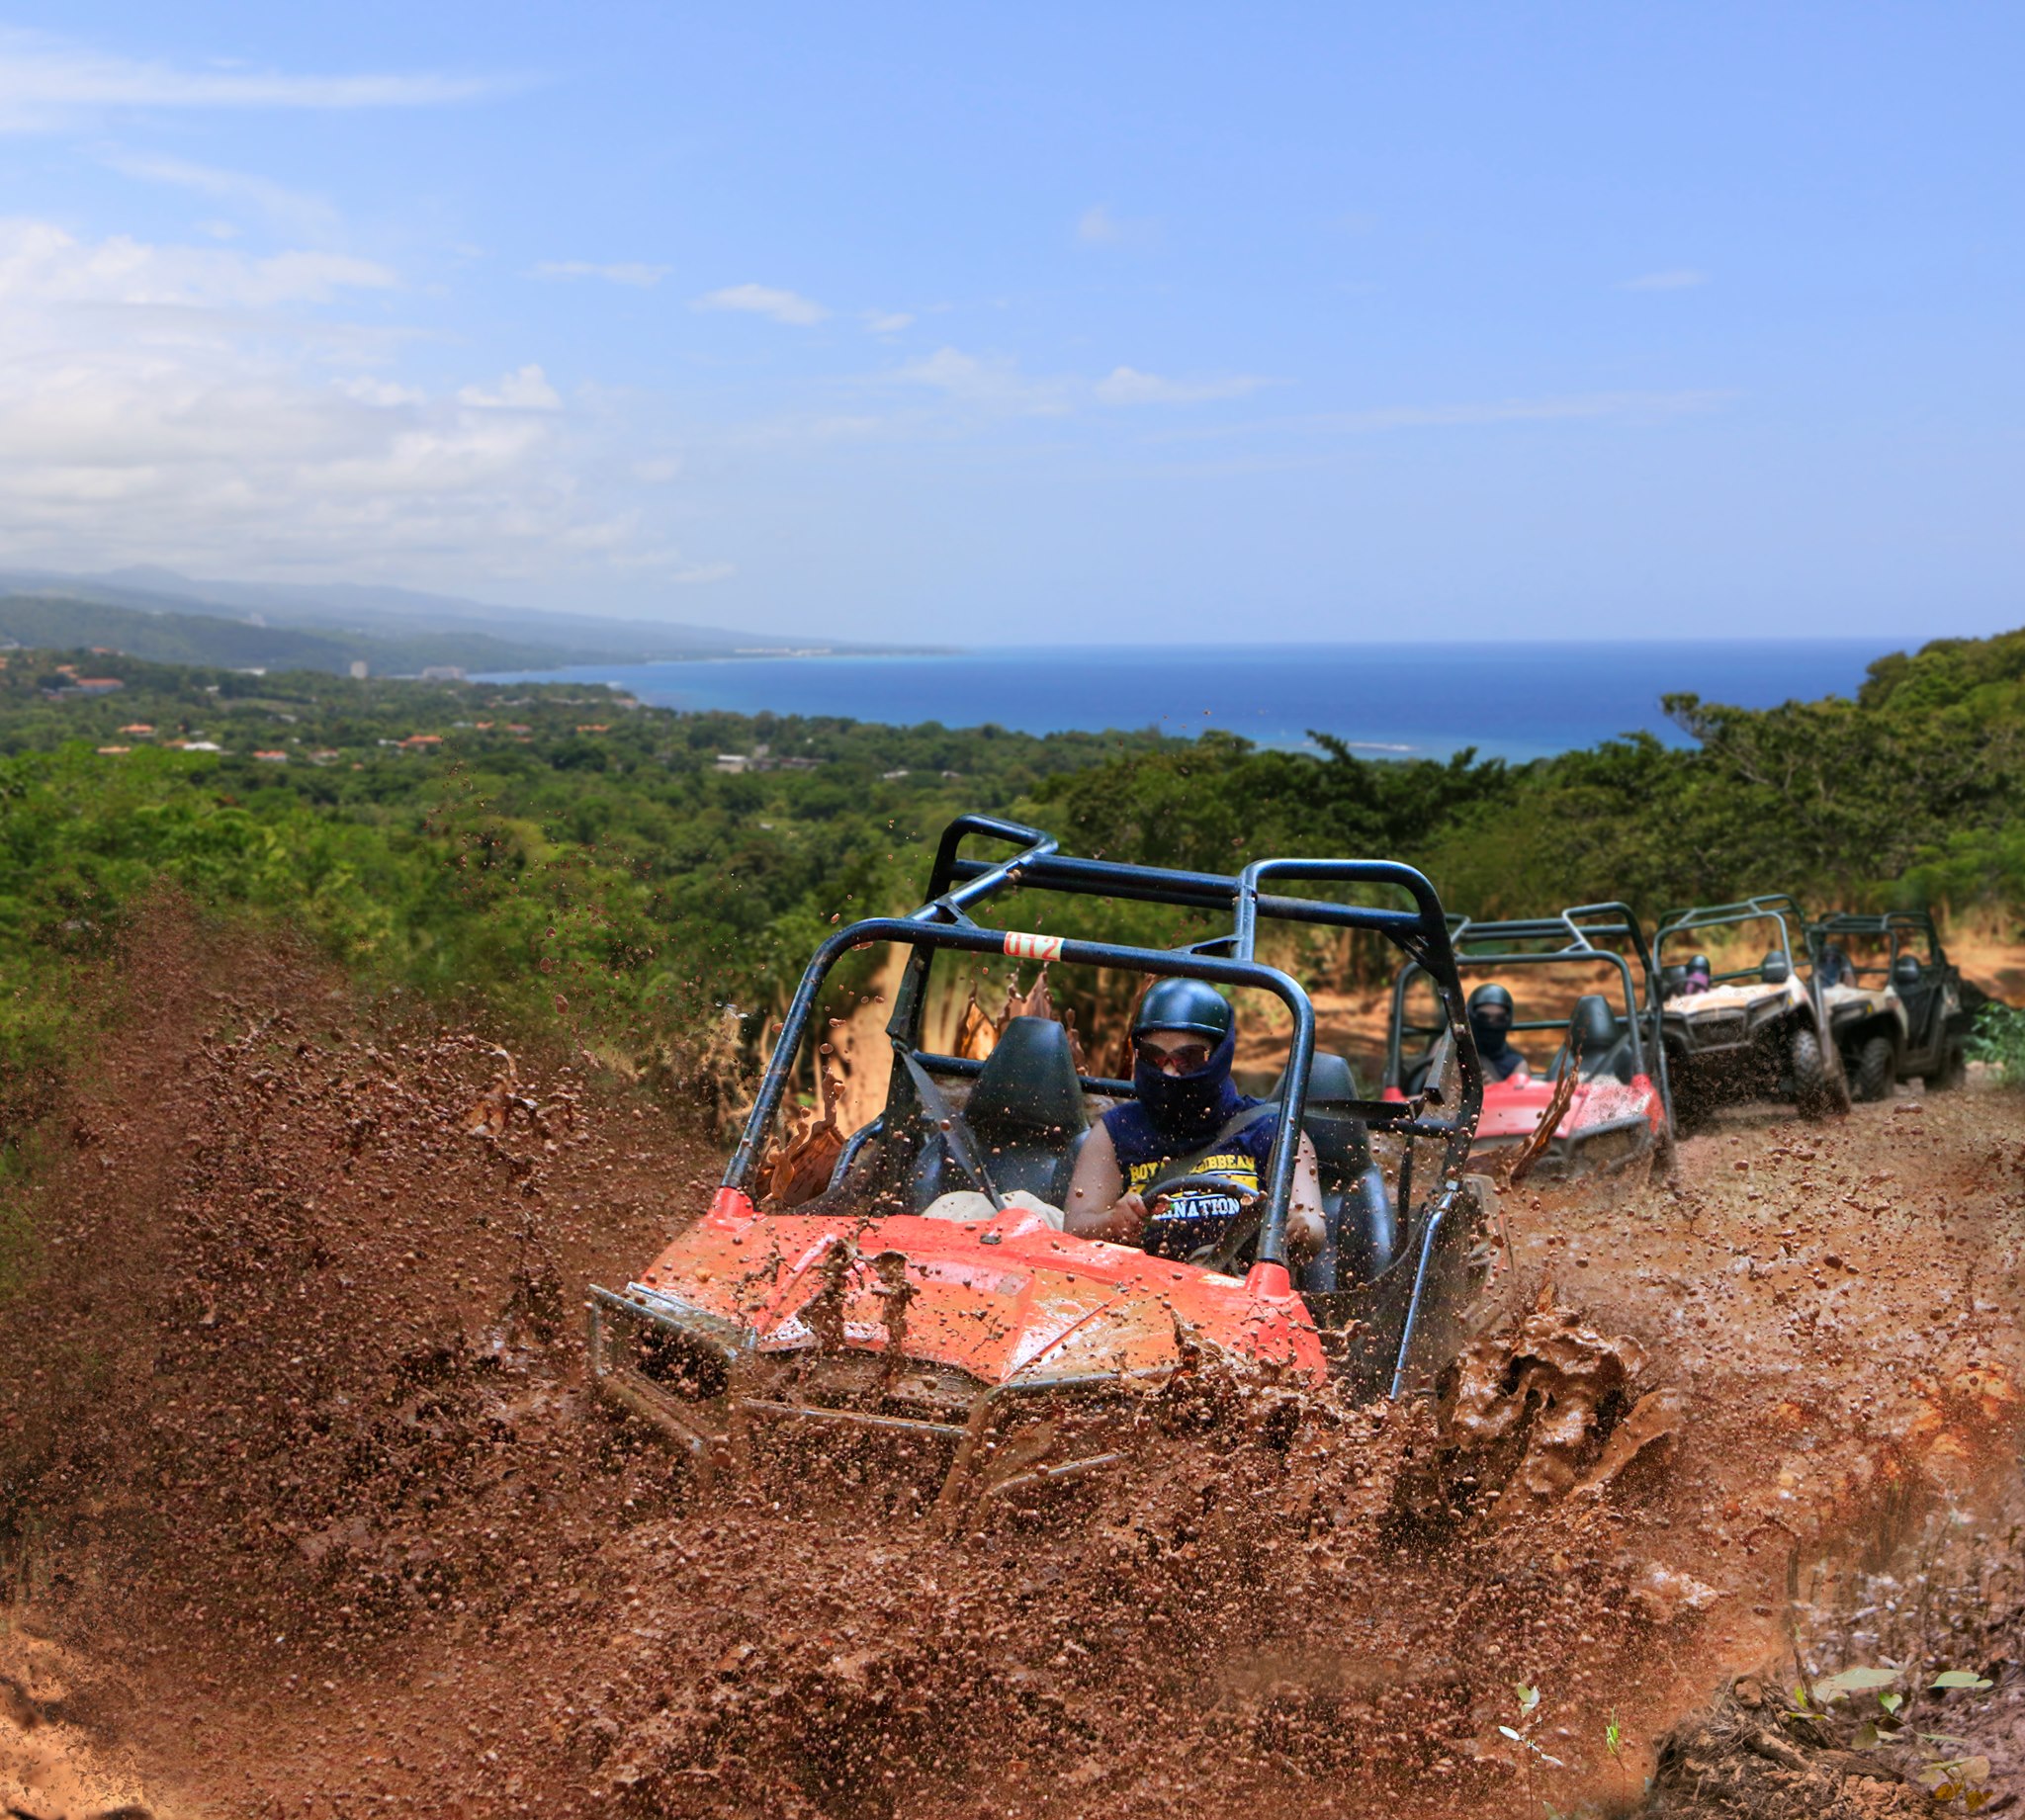 20 Best Popular Things To Do in & Near Ocho Rios, Saint Ann Jamaica on Vacation